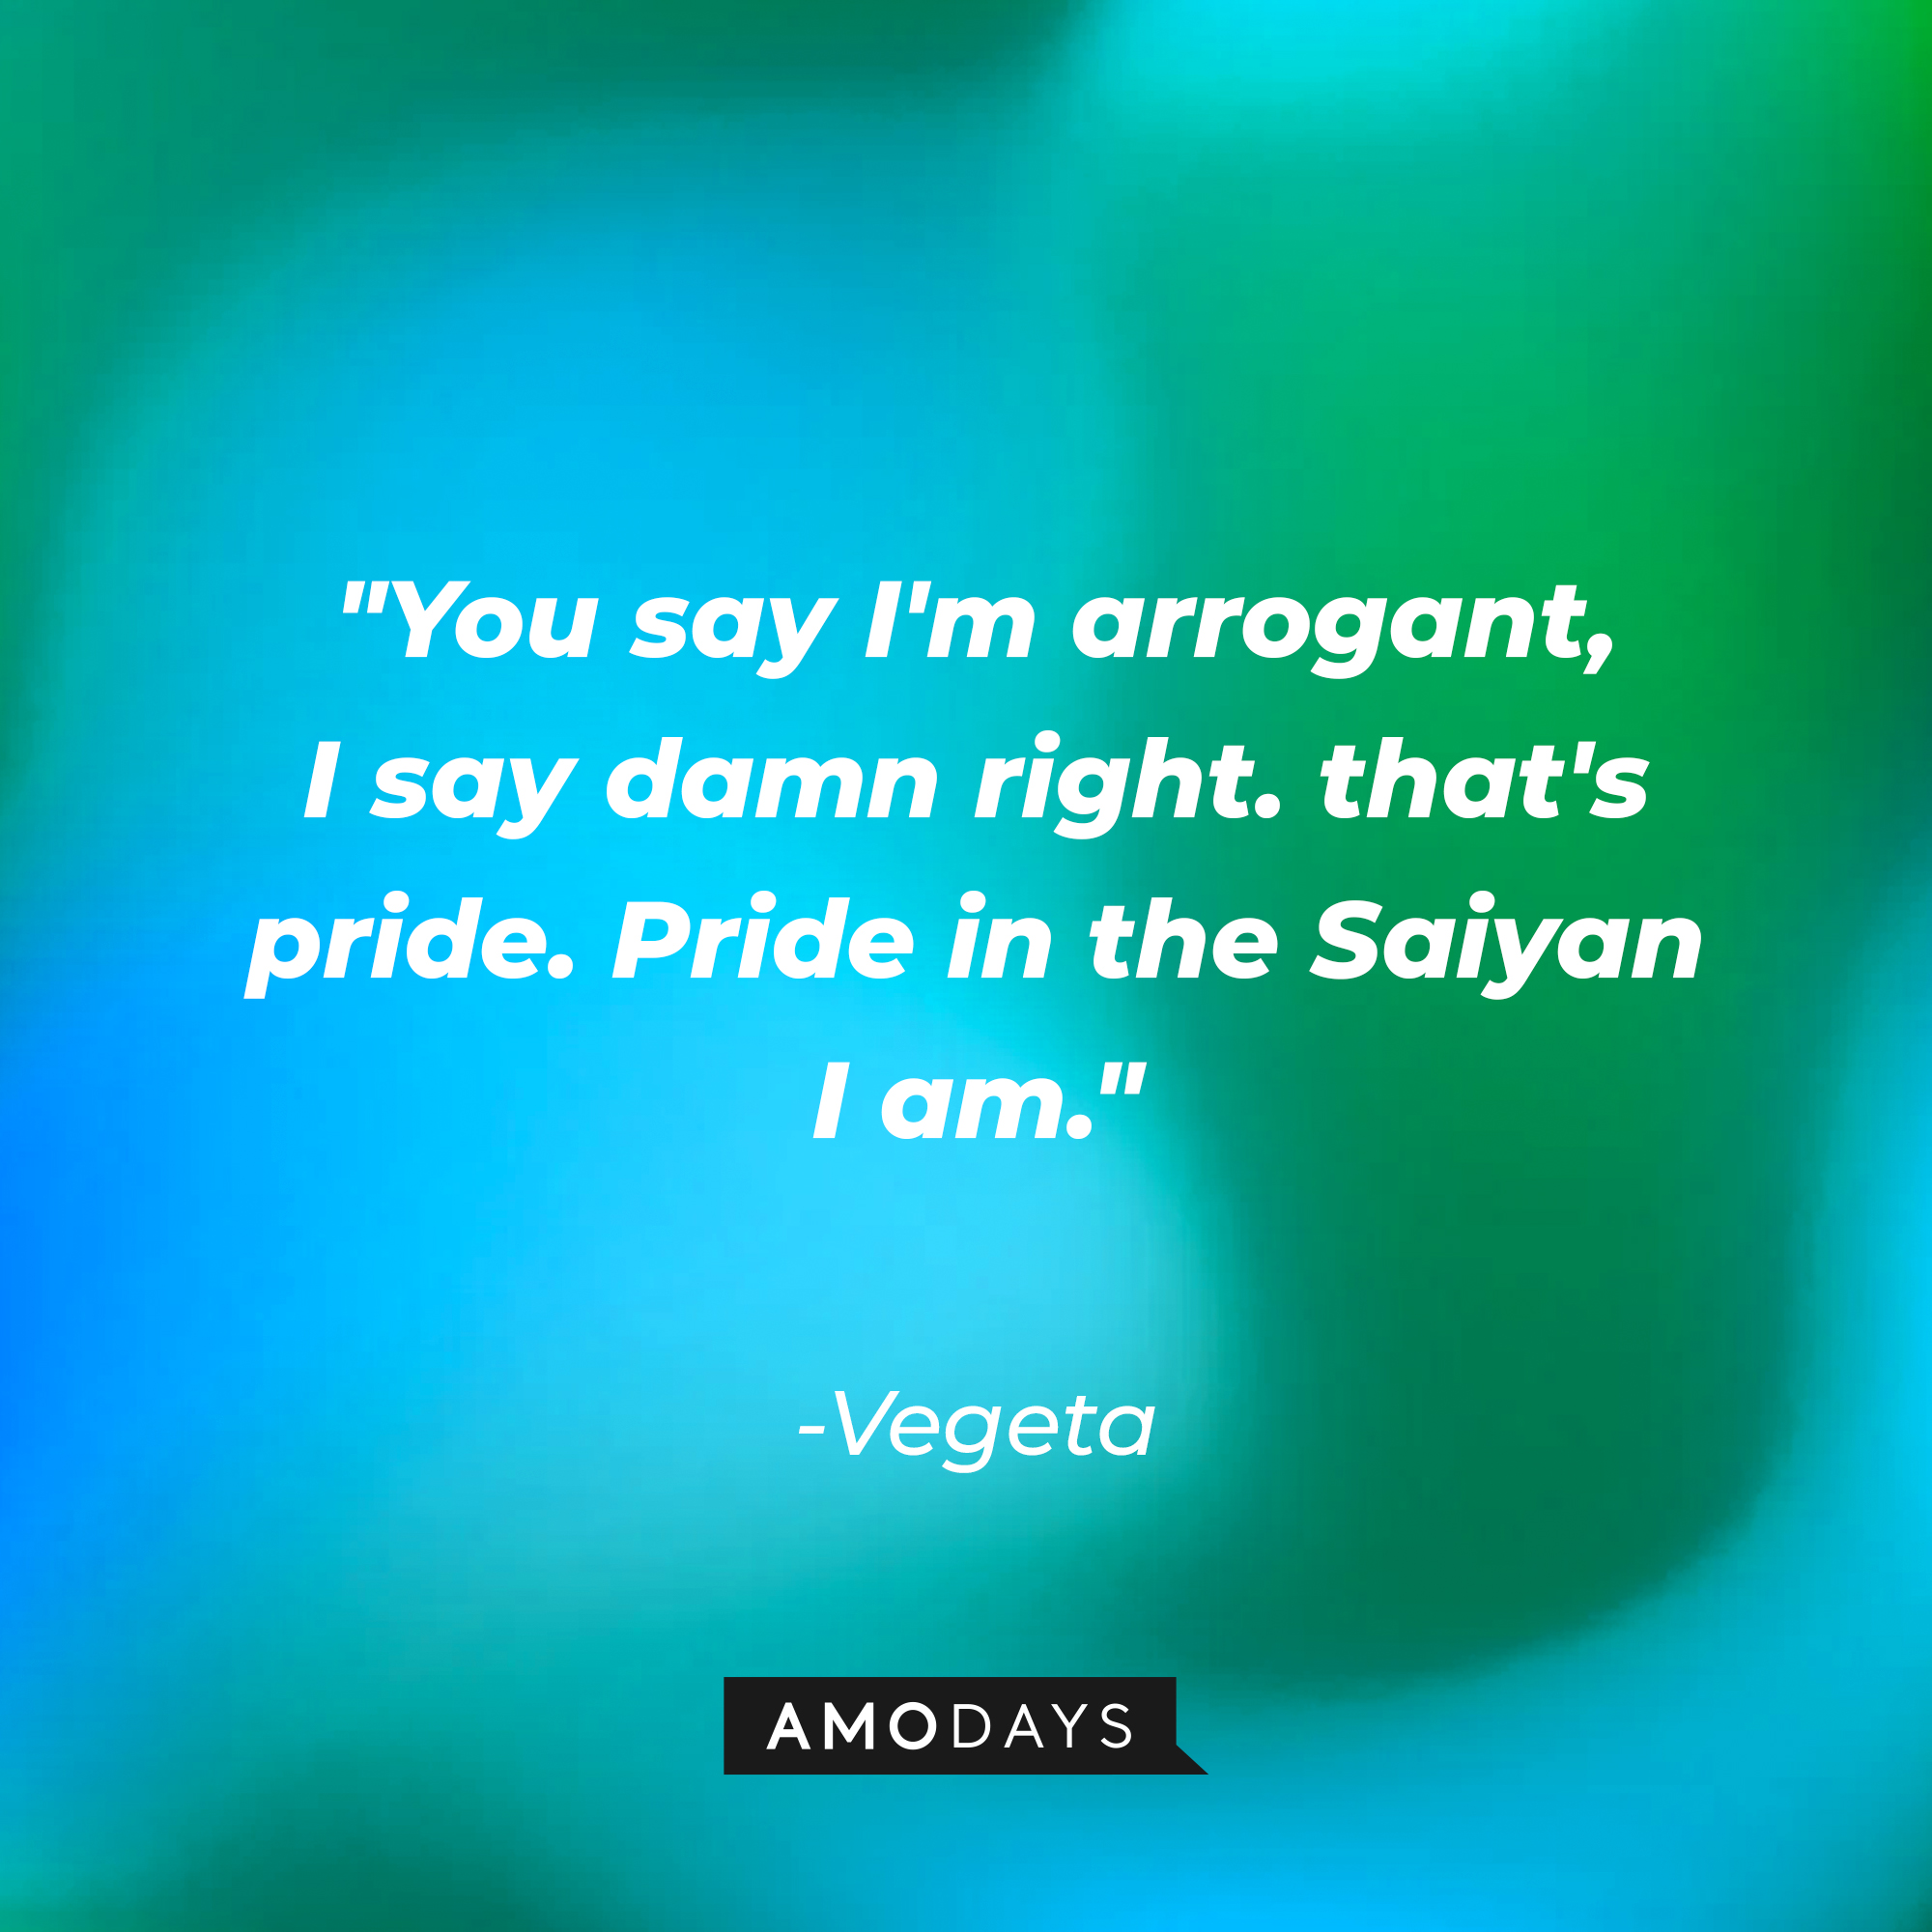 Vegeta's quote: "You say I'm arrogant, I say damn right. that's pride. Pride in the Saiyan I am." | Source: Amodays